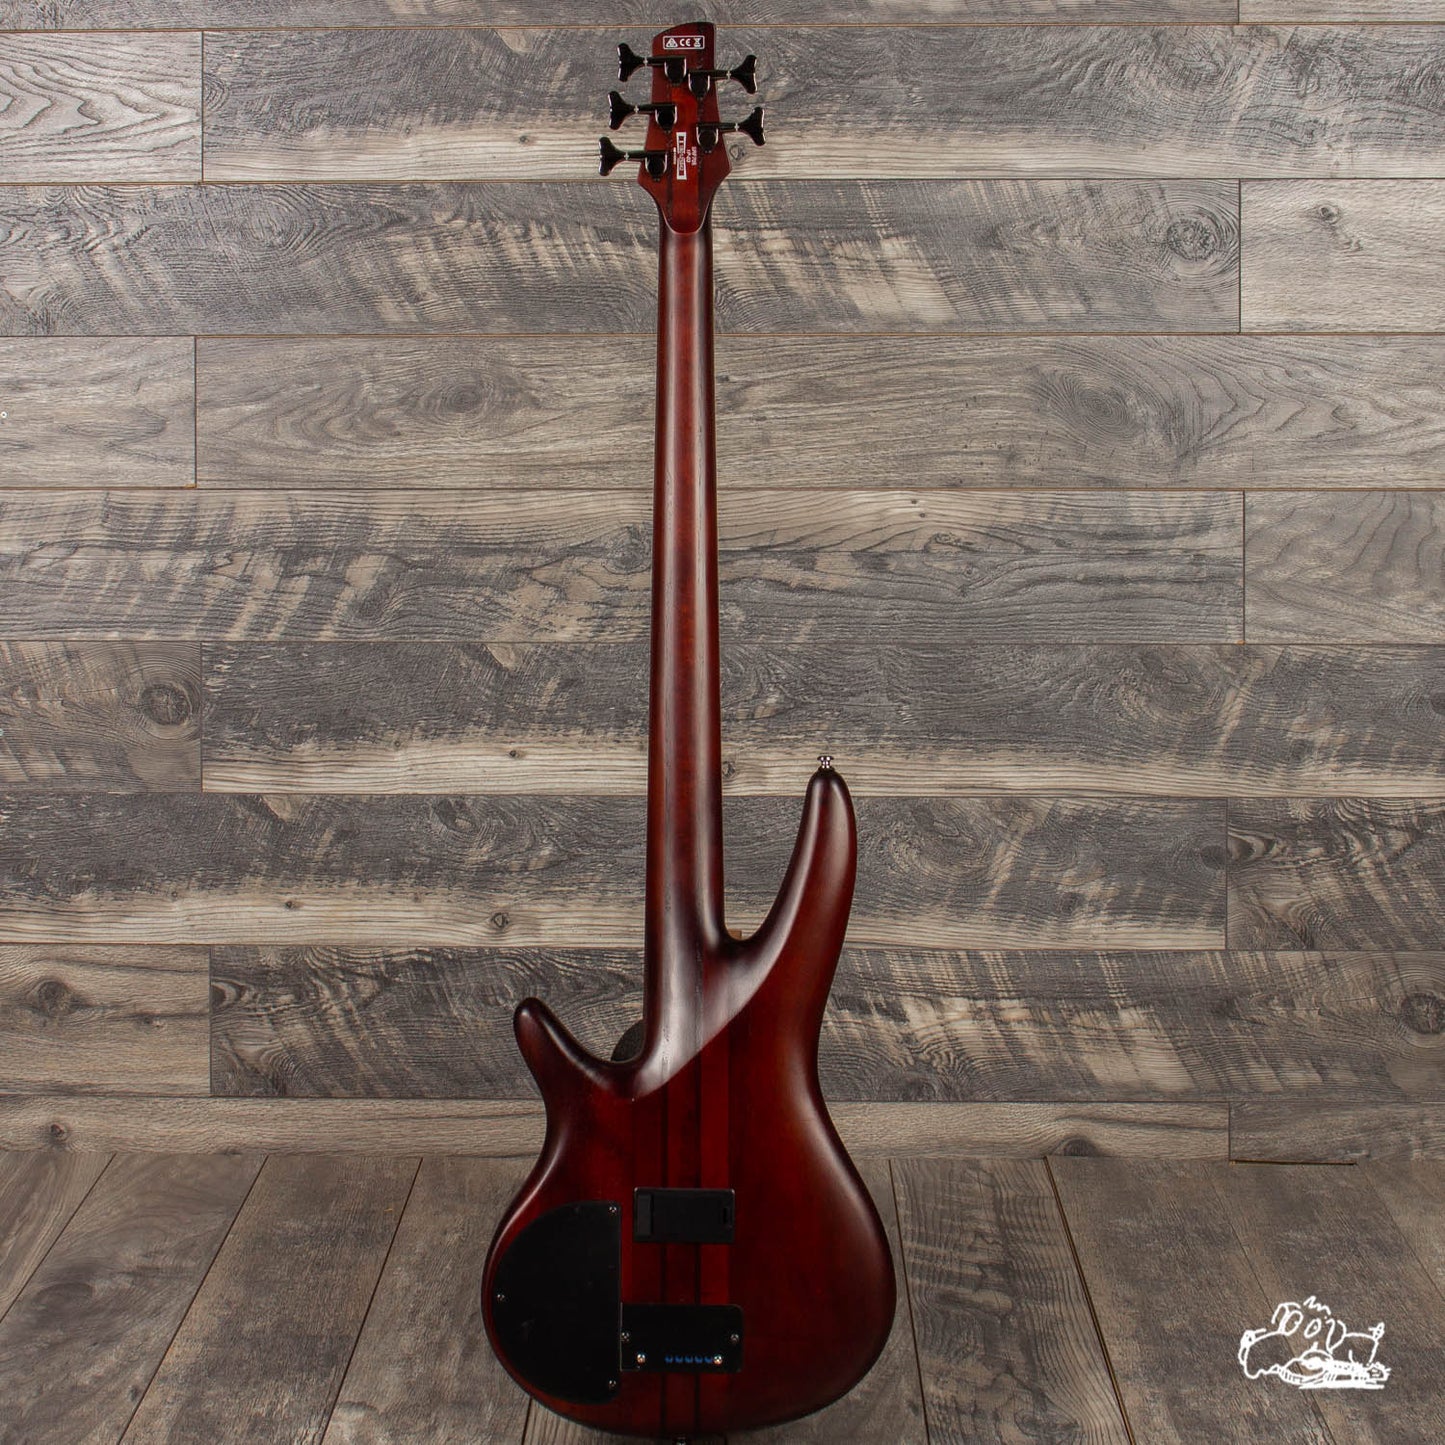 Ibanez SRF705 Fretless Bass Guitar - Brown Burst